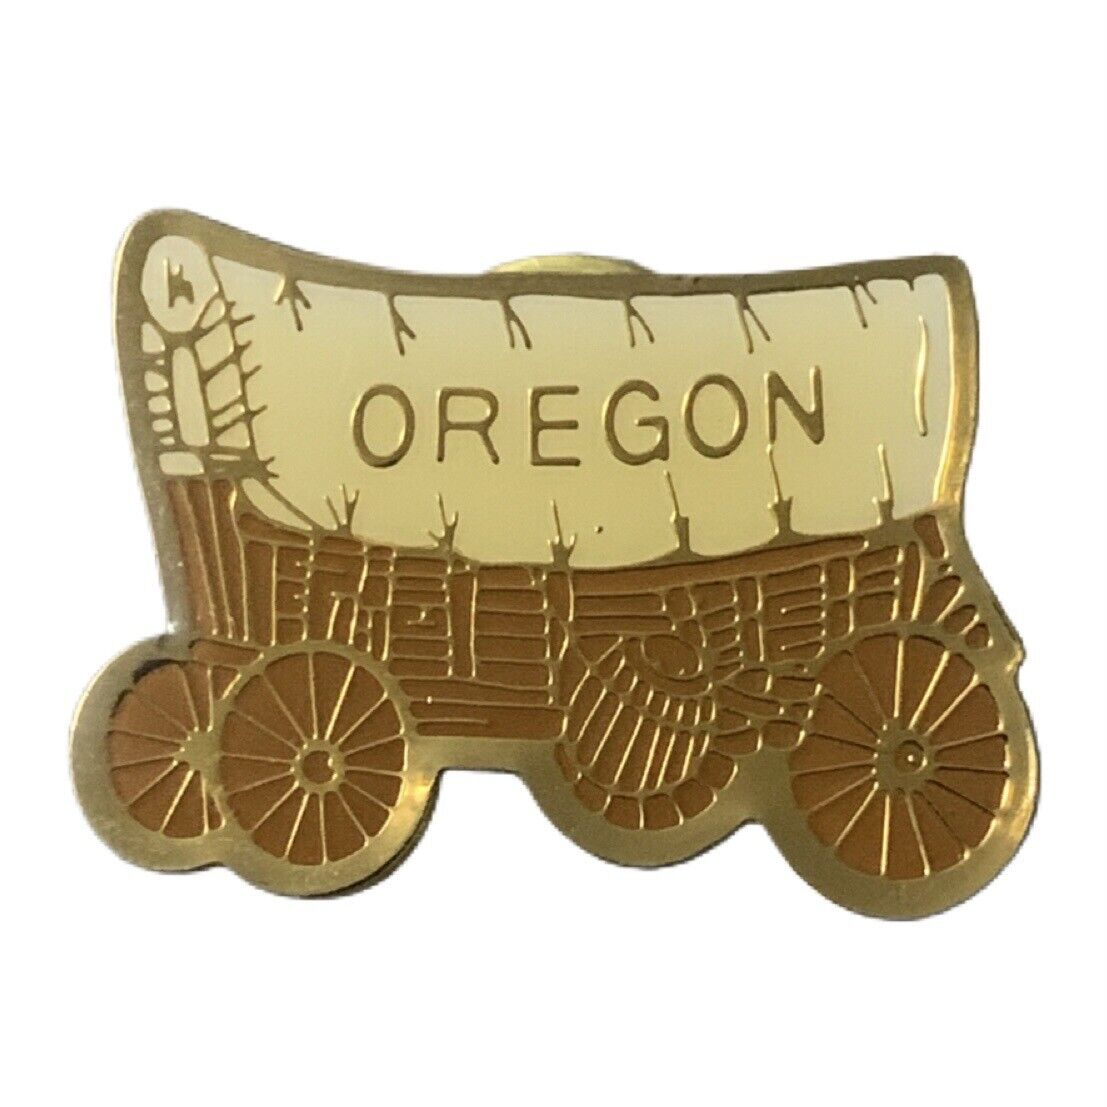 Oregon Covered Wagon Travel Souvenir Pin